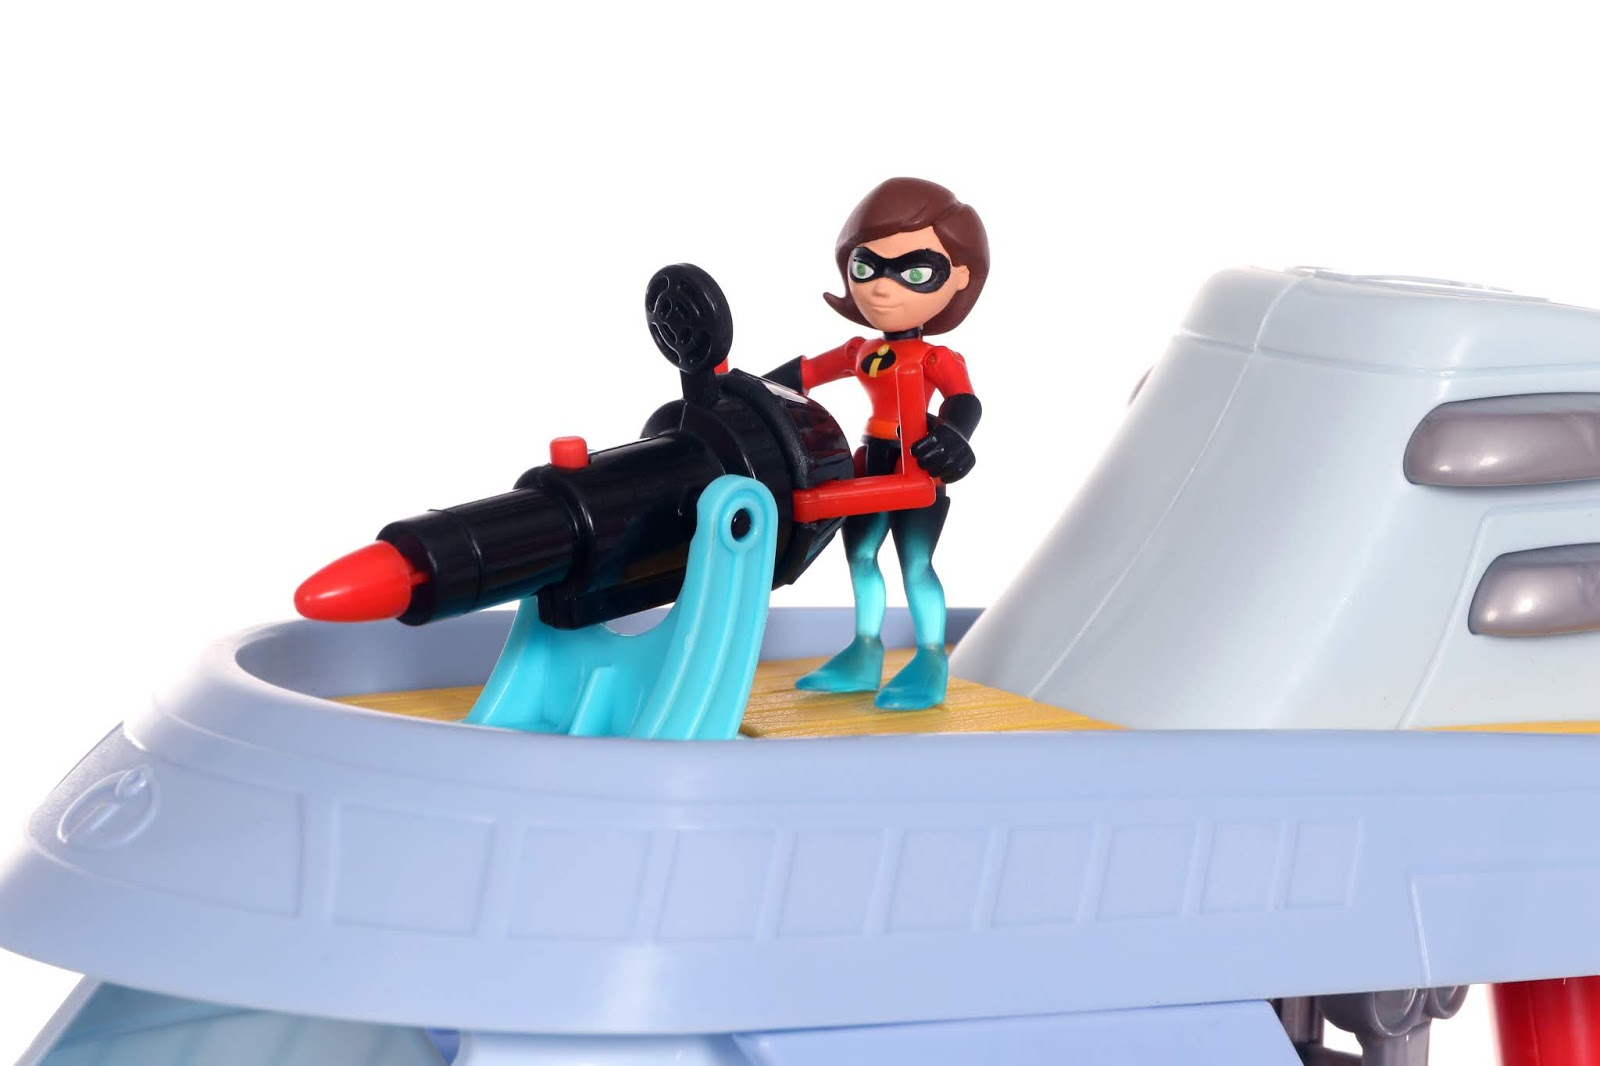  Incredibles 2 "Junior Supers" Hydroliner Playset Jakks Pacific